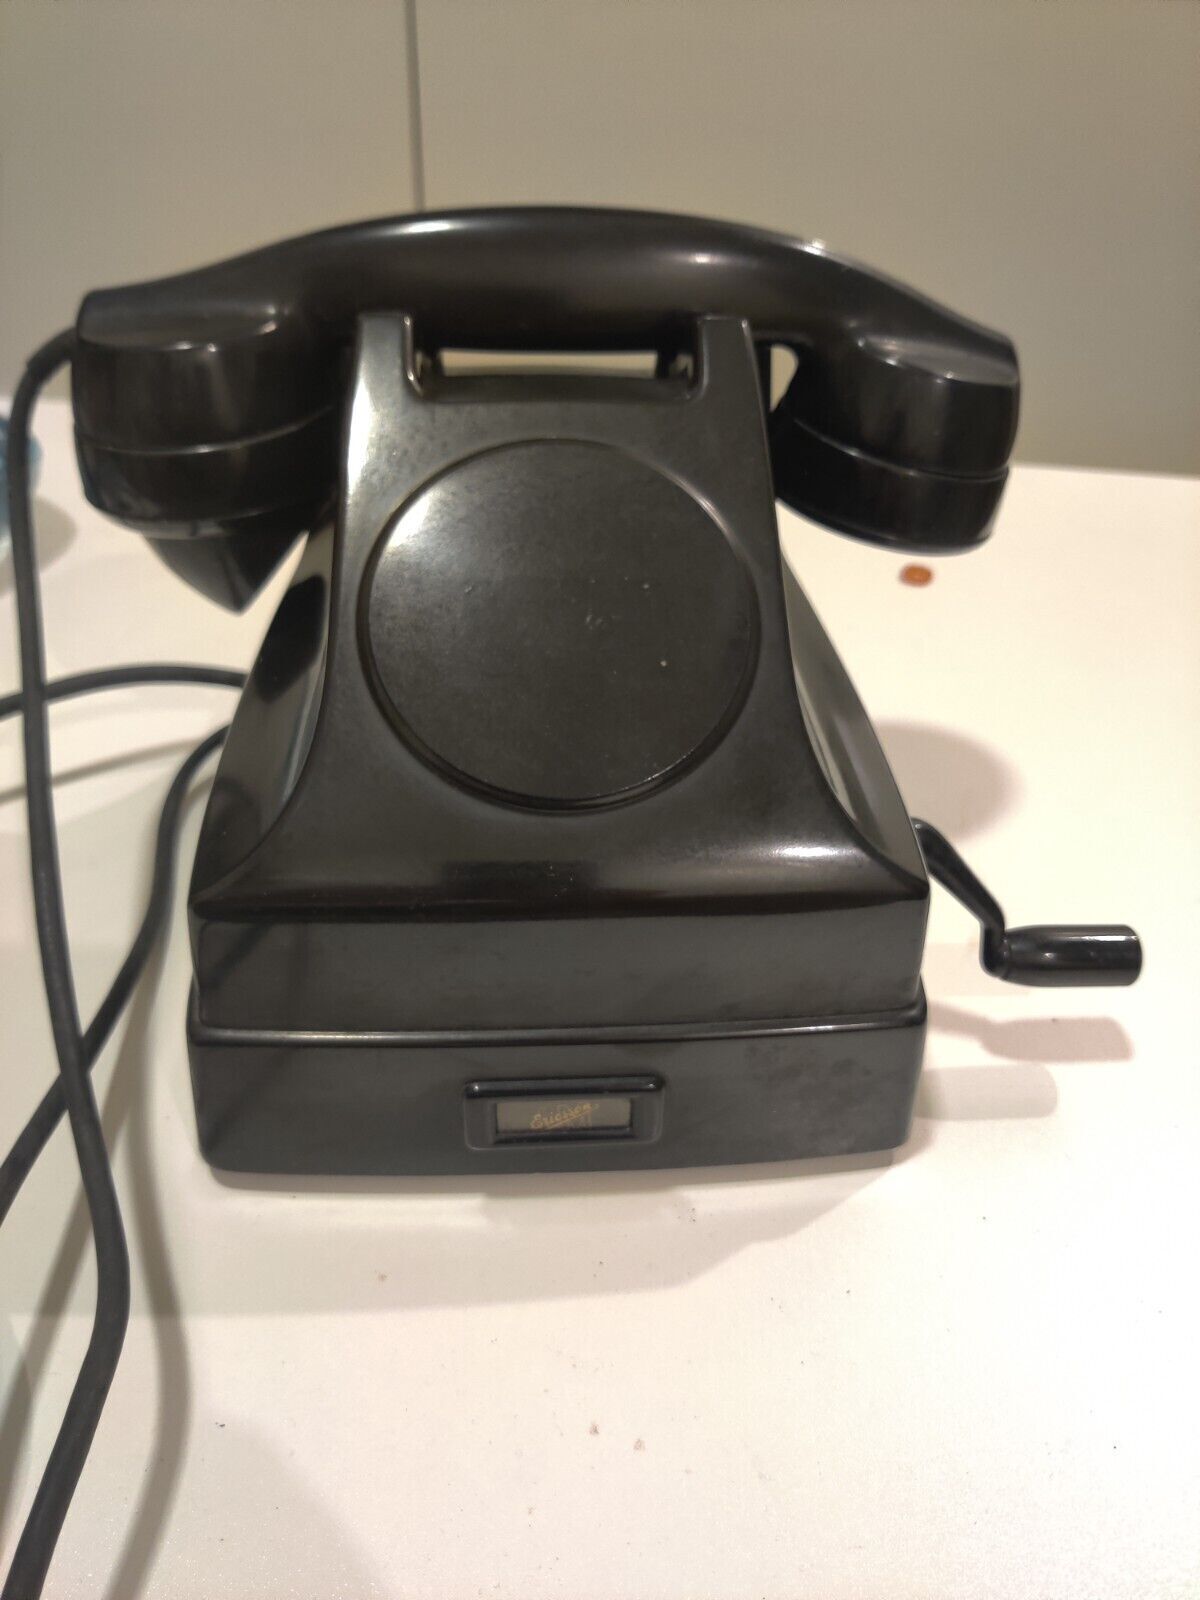 LM ERICSSON DAH 13001 HAND CRANCK TELEPHONE. BAKELITE. 1960s. MADE IN SWEDEN